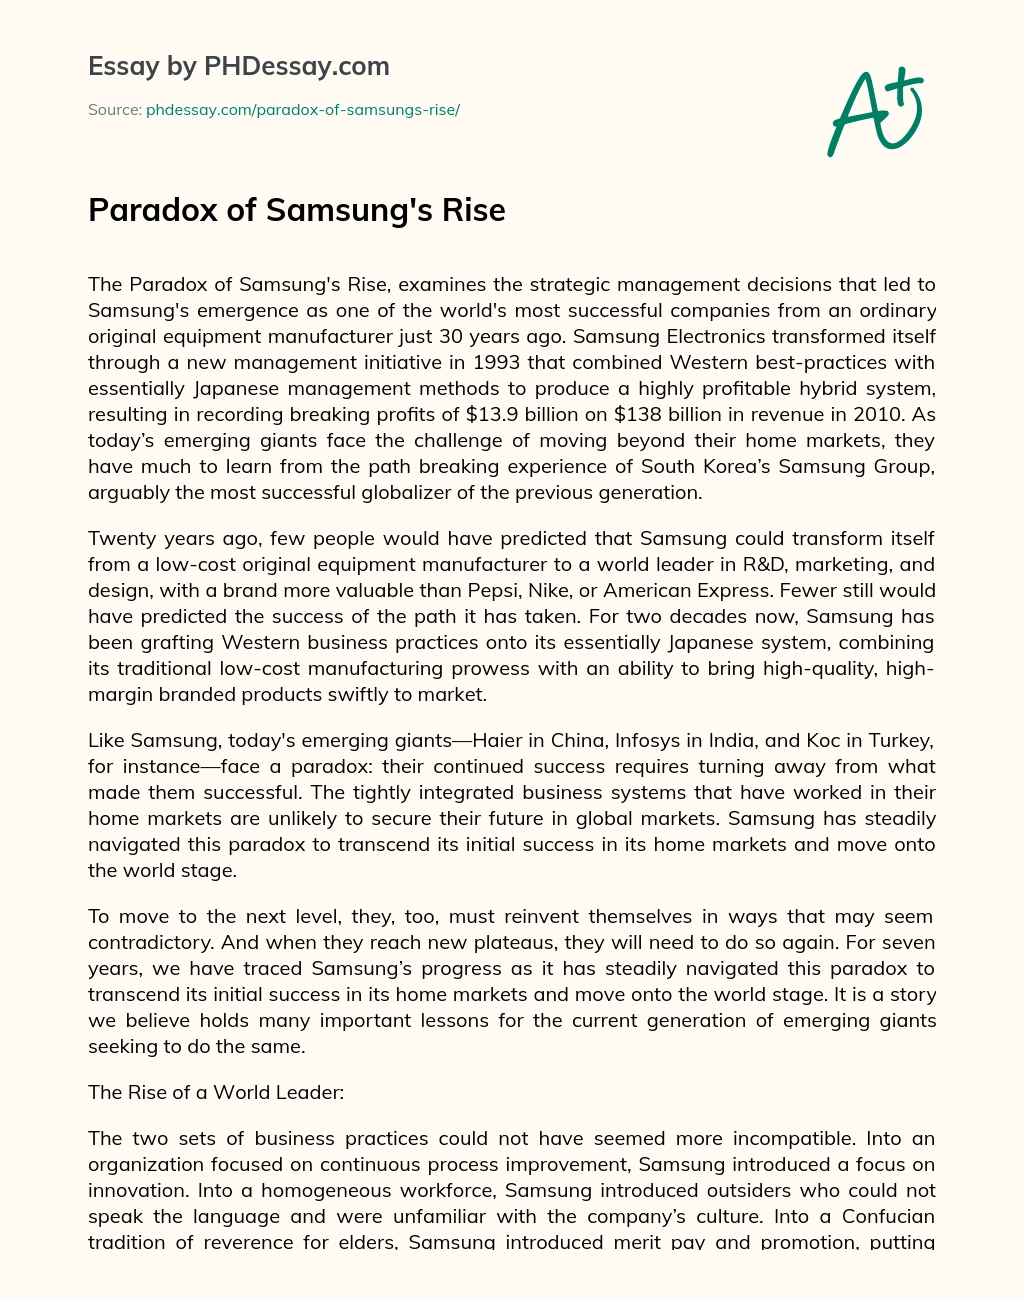 Paradox of Samsung’s Rise essay